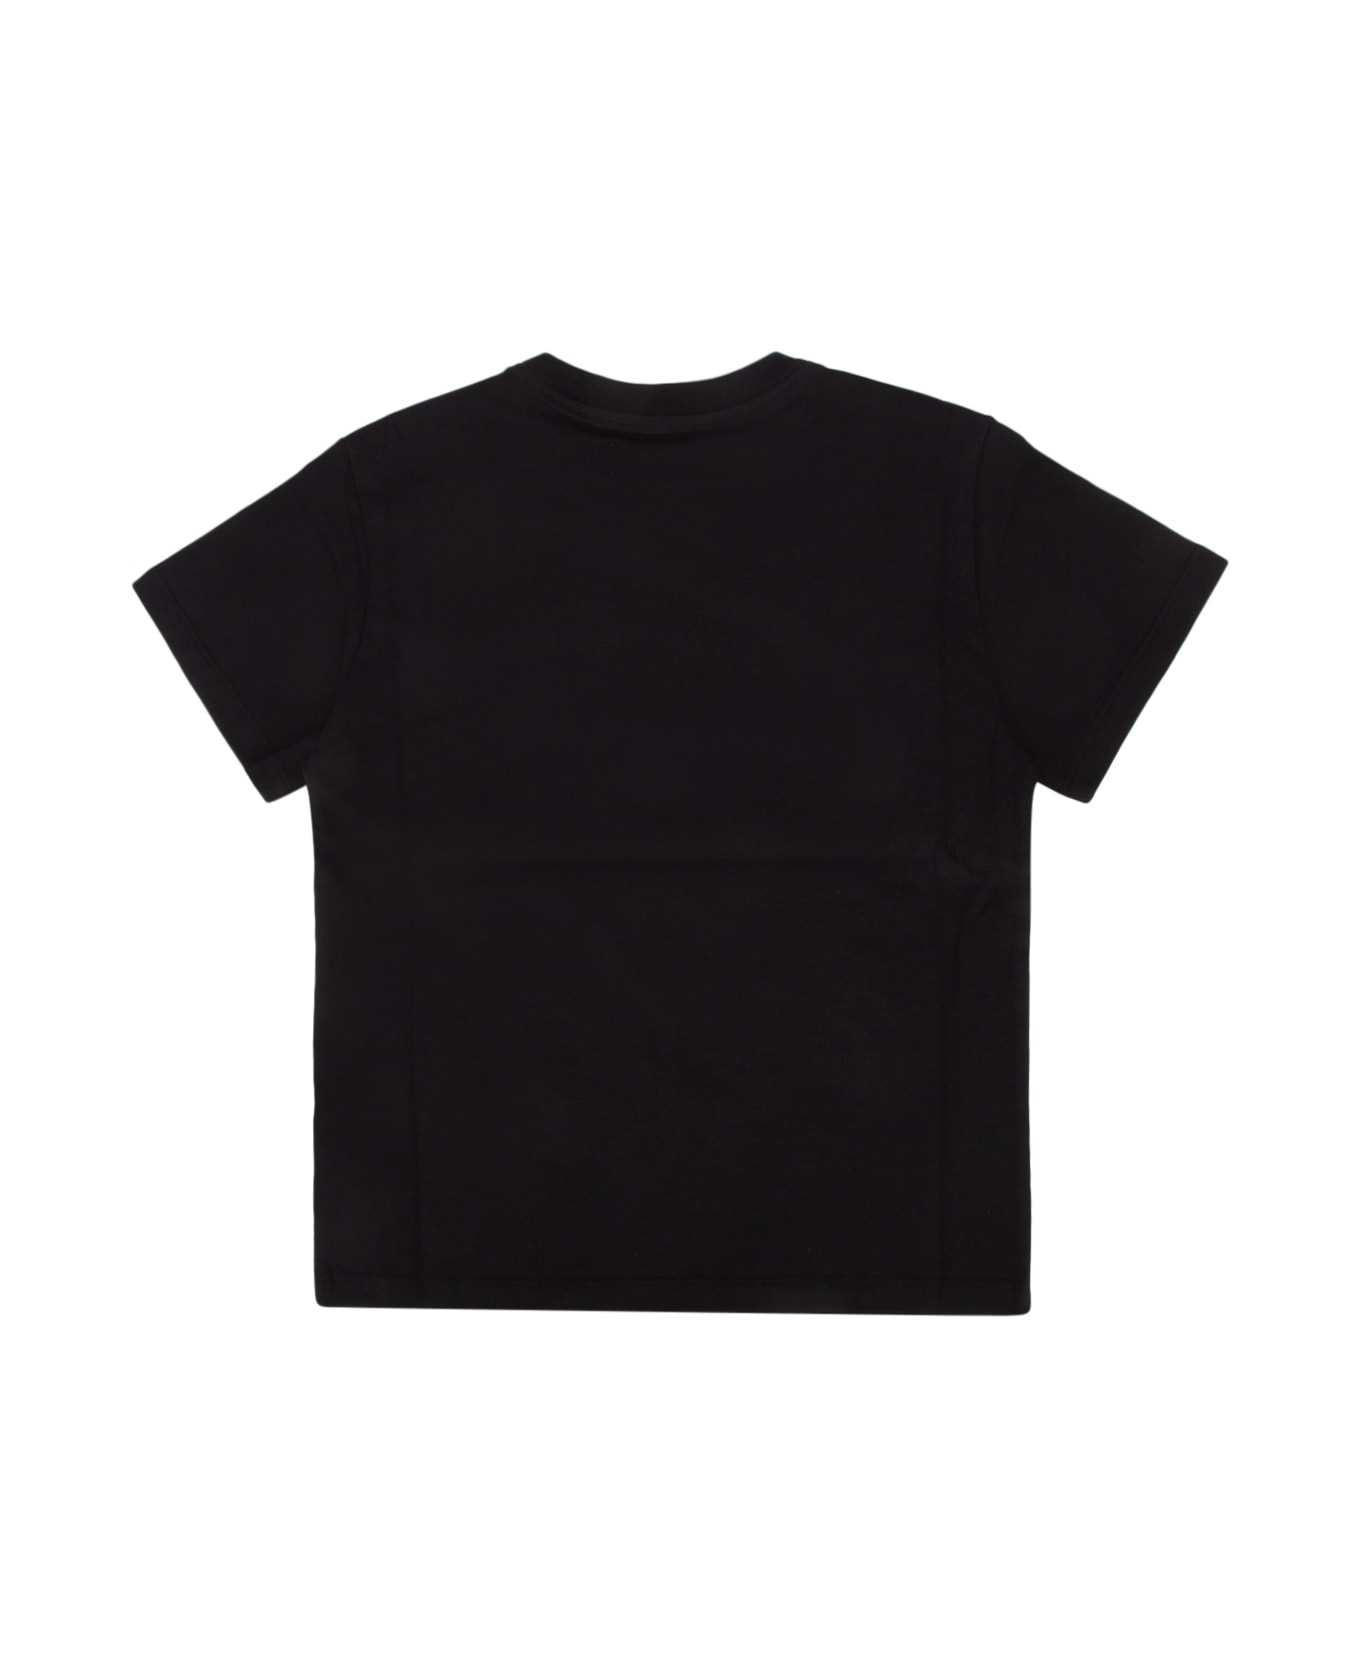 AMIRI T-shirt - BLACK